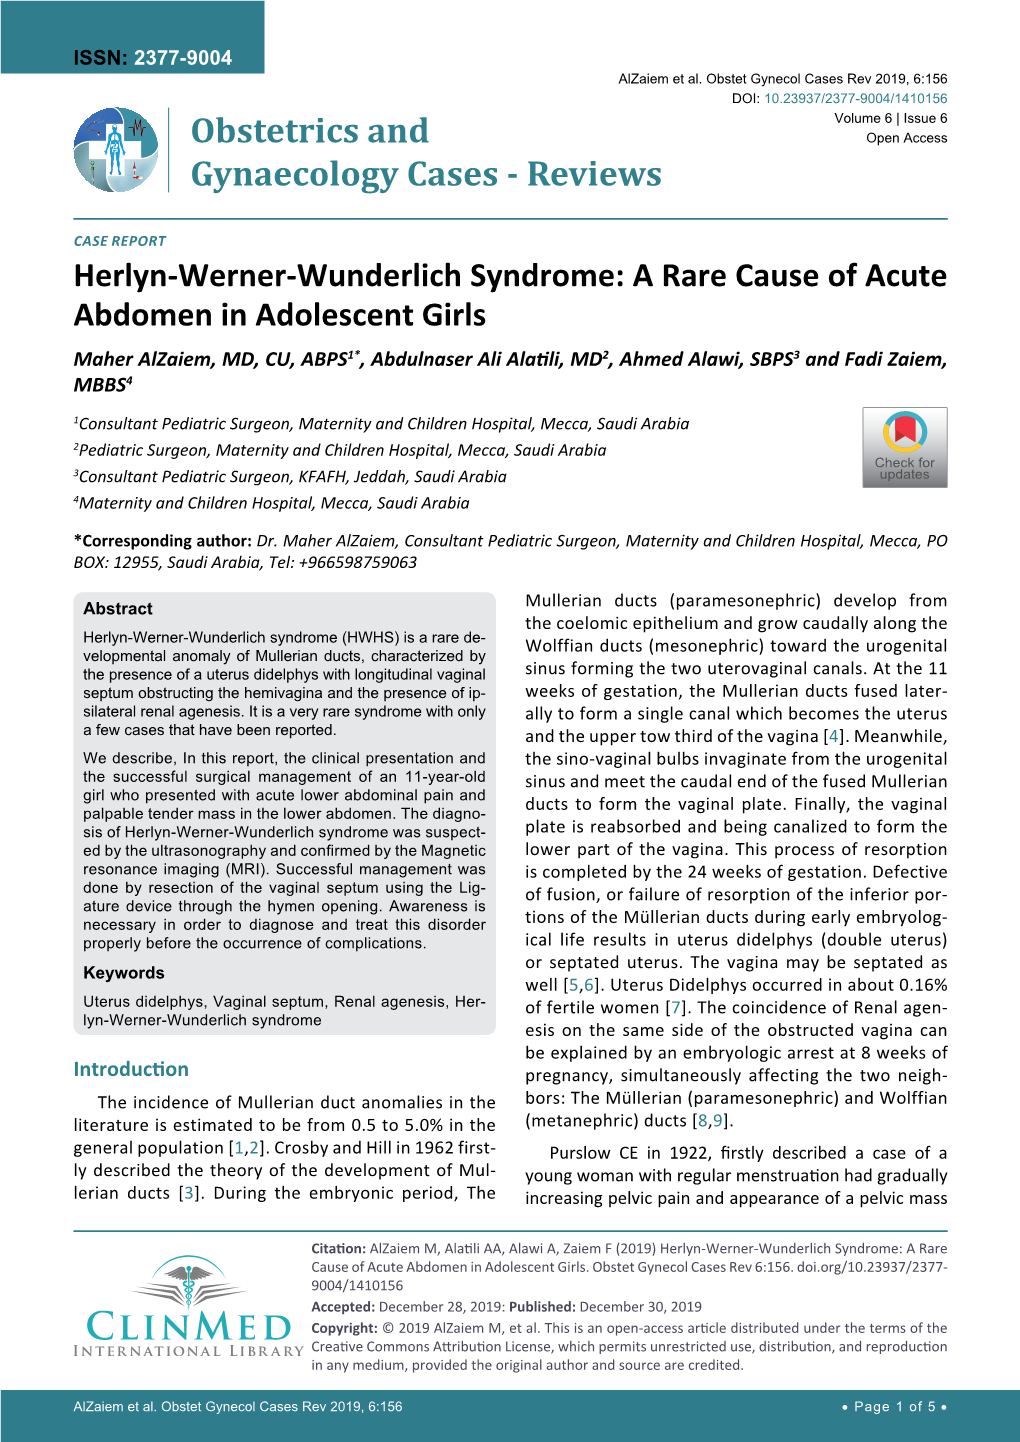 A Rare Cause of Acute Abdomen in Adolescent Girls Maher Alzaiem, MD, CU, ABPS1*, Abdulnaser Ali Alatili, MD2, Ahmed Alawi, SBPS3 and Fadi Zaiem, MBBS4